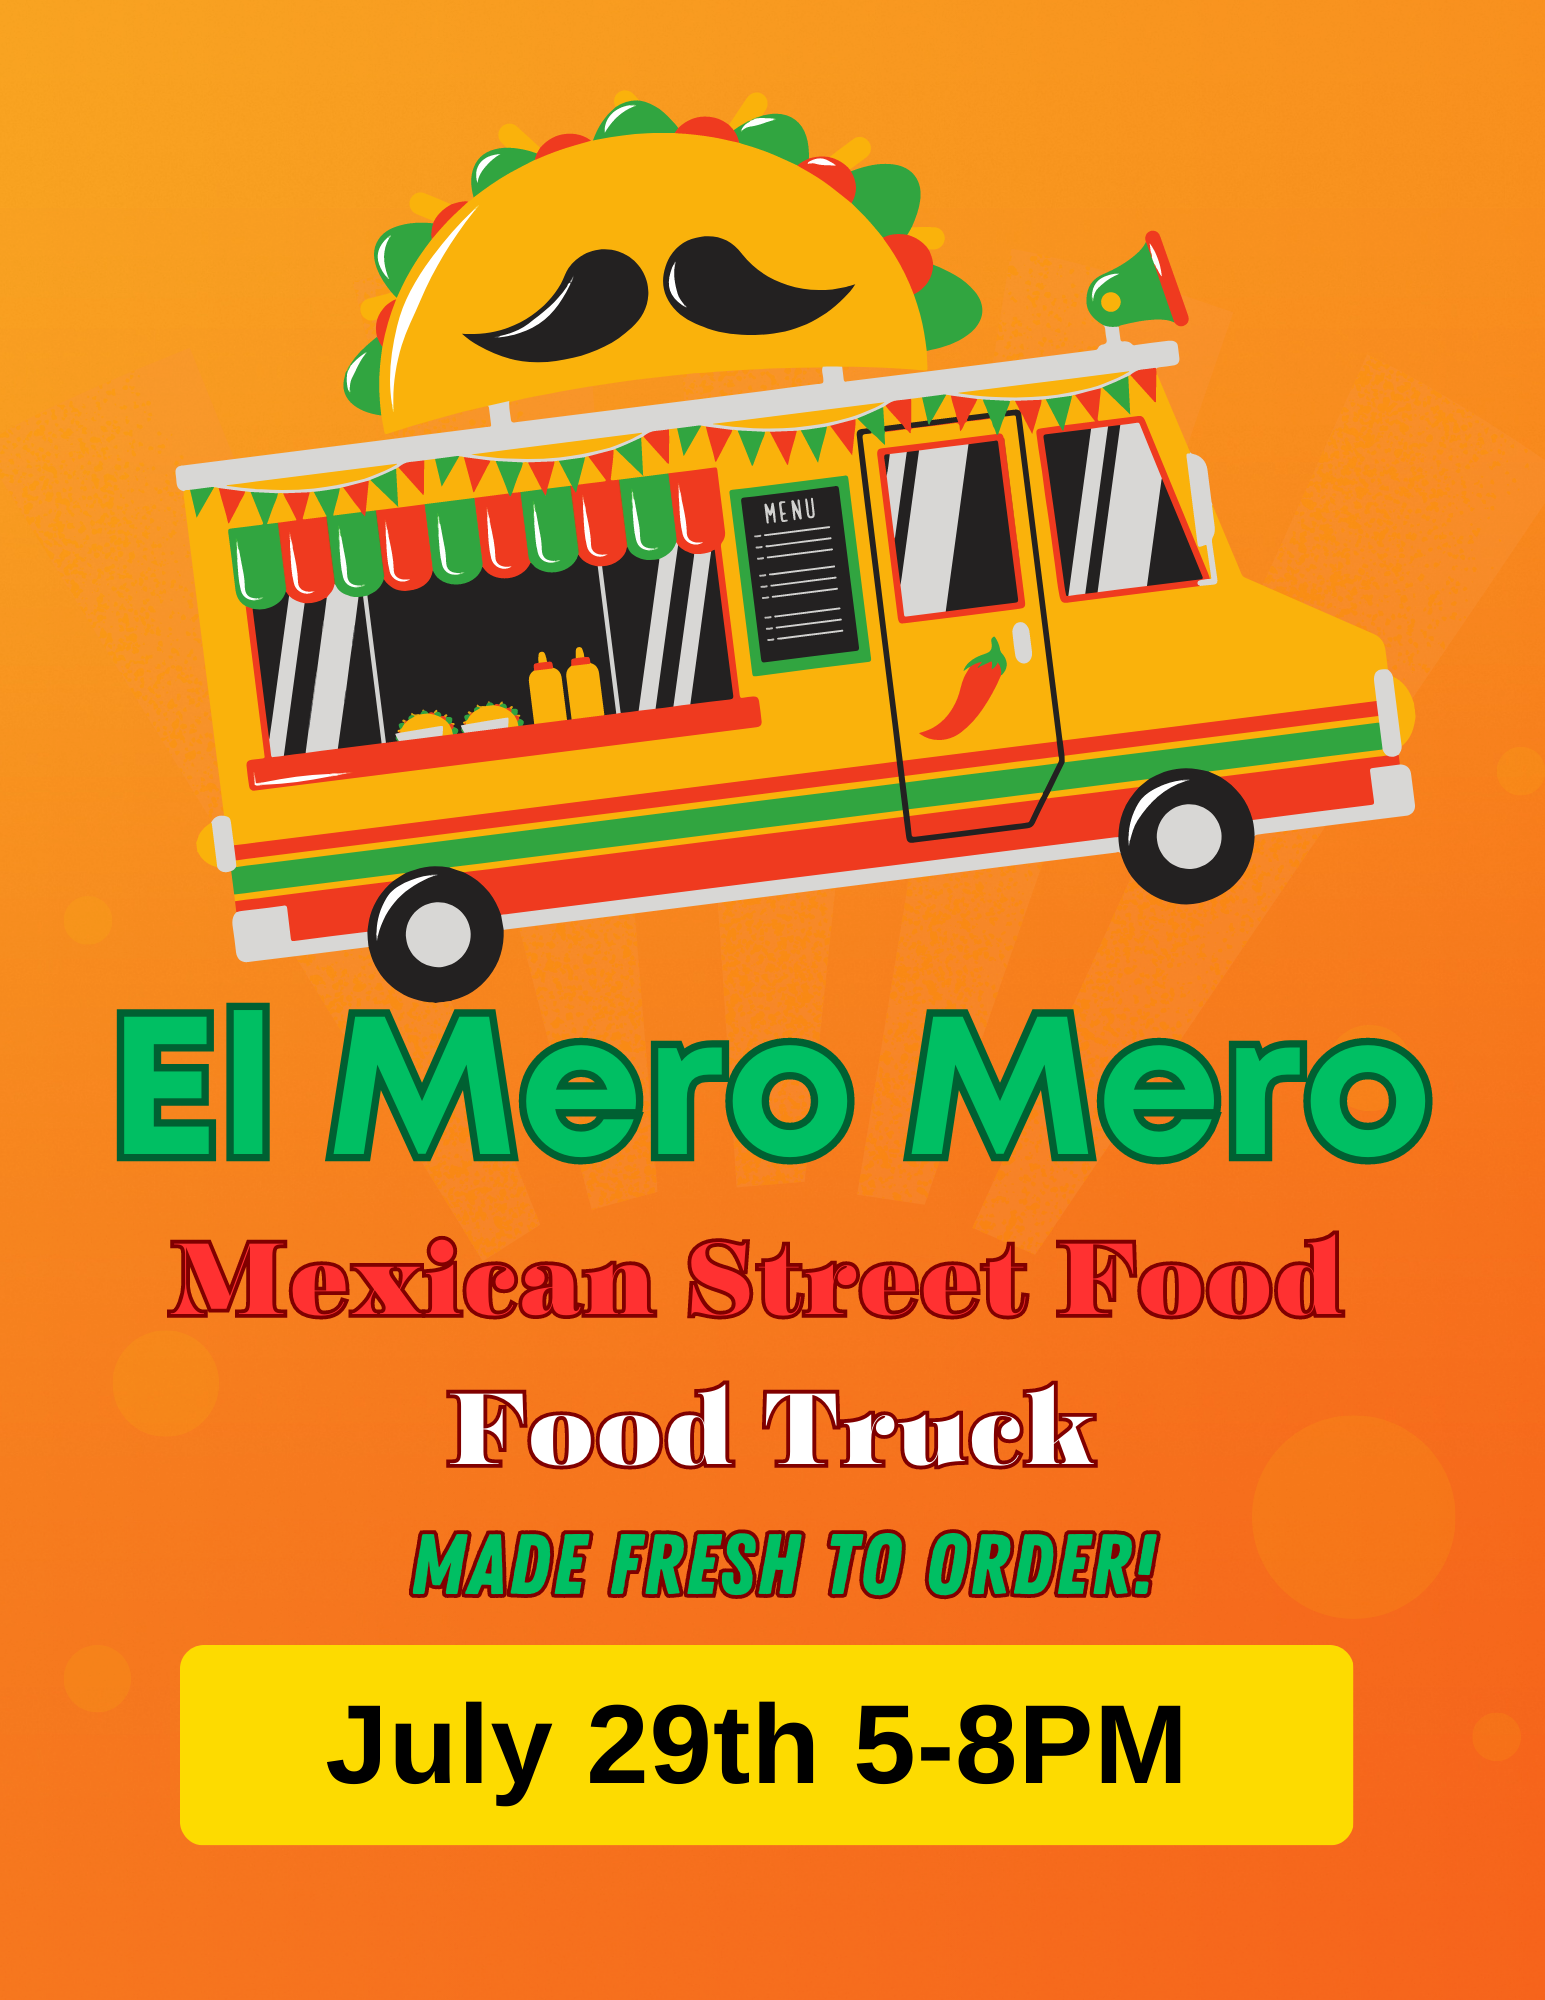 Mexican Street Food Truck Saturday July 29 5-8pm